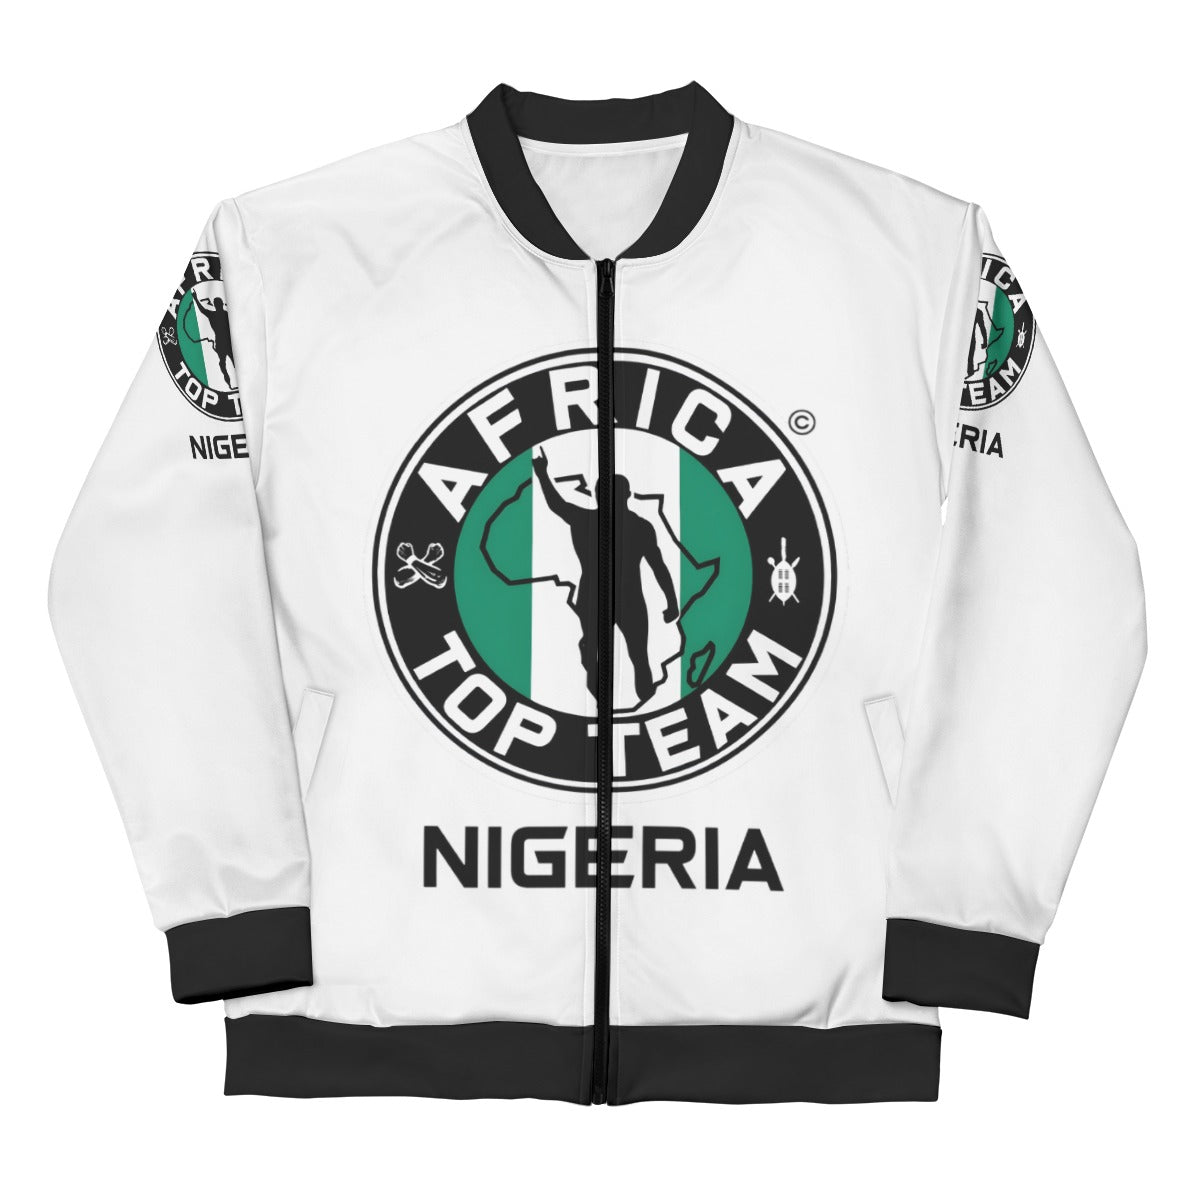 Africa Top Team Nigeria White Bomber Jacket